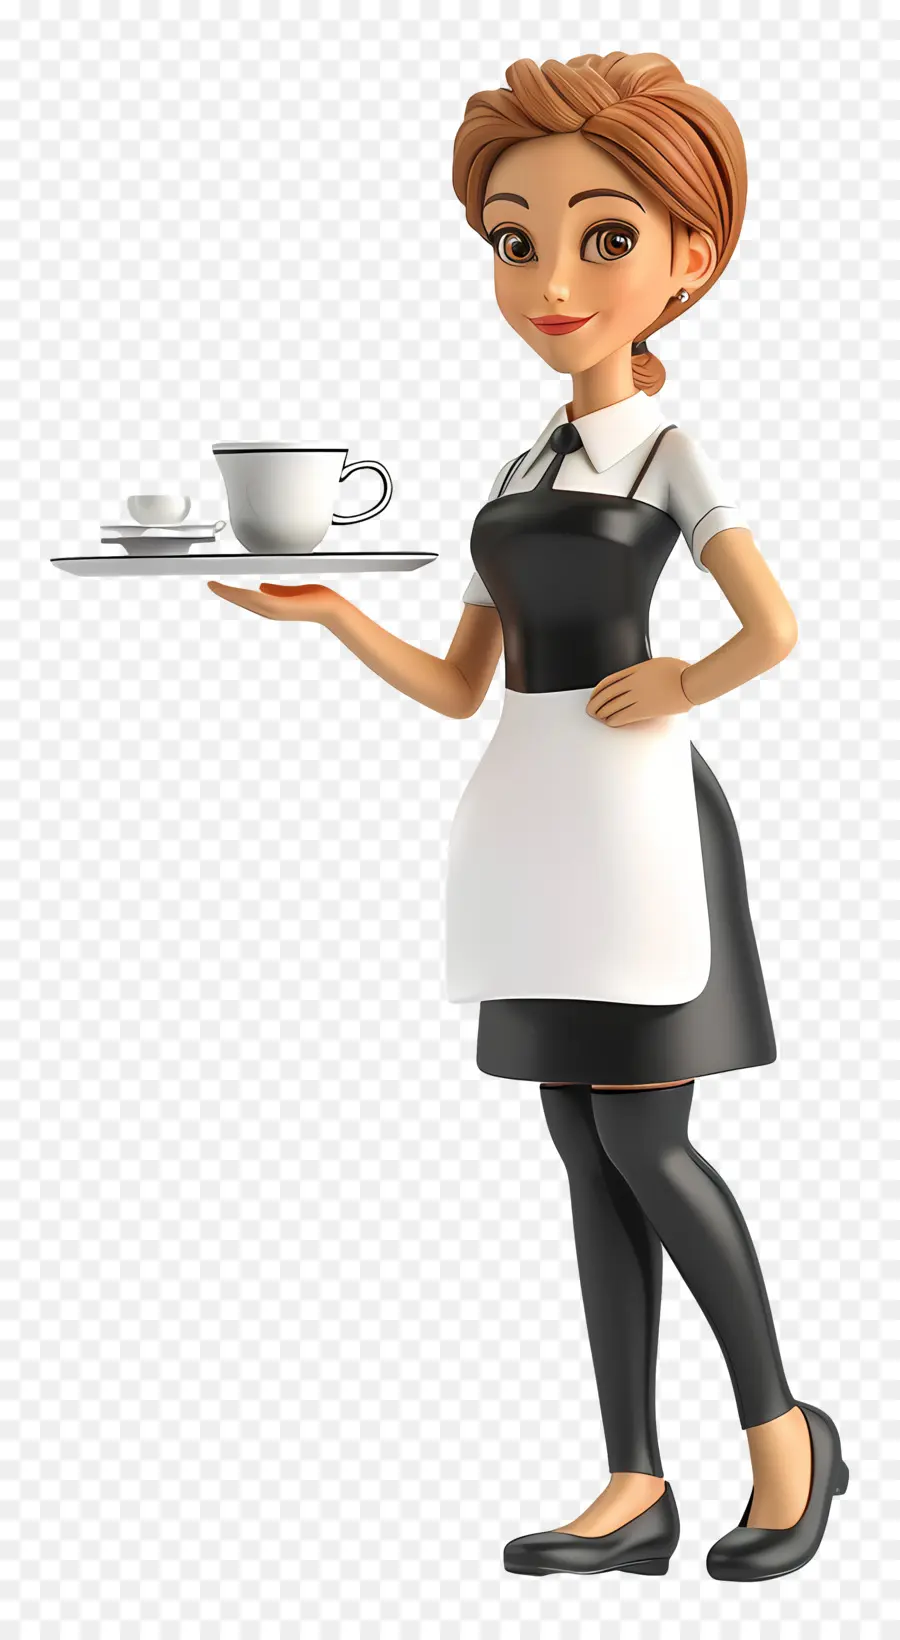 Kellnerin Kellner Kaffee Tassen Tablett Schürze - Kellnerin mit Kaffeetablett auf schwarzem Hintergrund